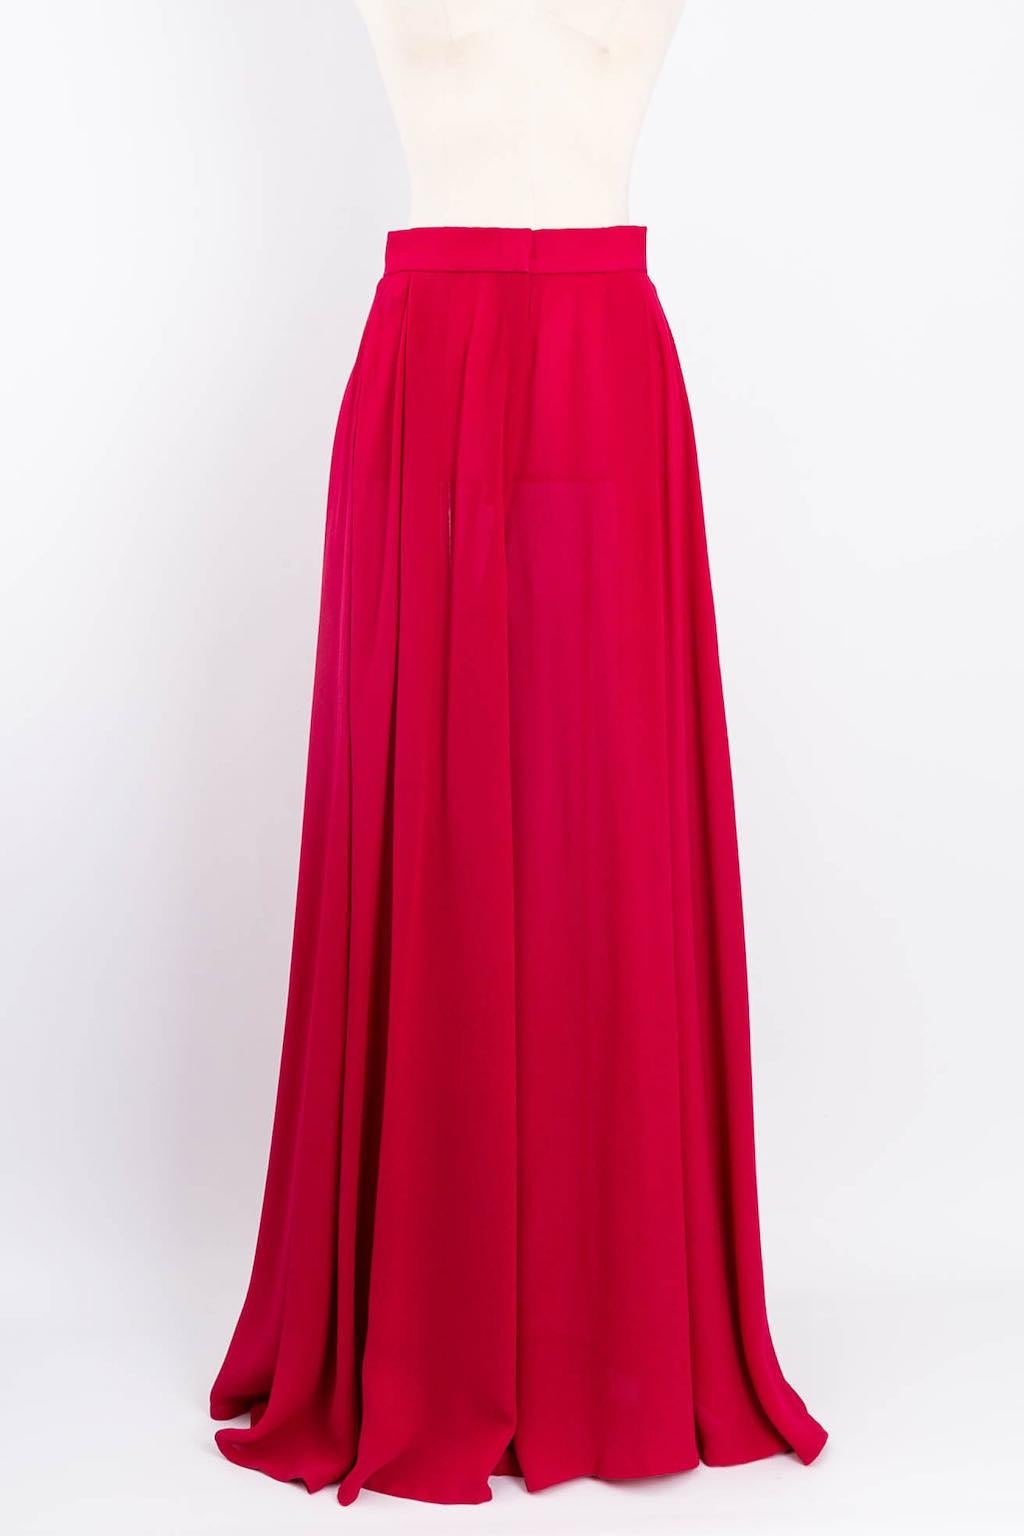 Emanuel Ungaro Haute Couture Pink Silk Chiffon Set For Sale 1